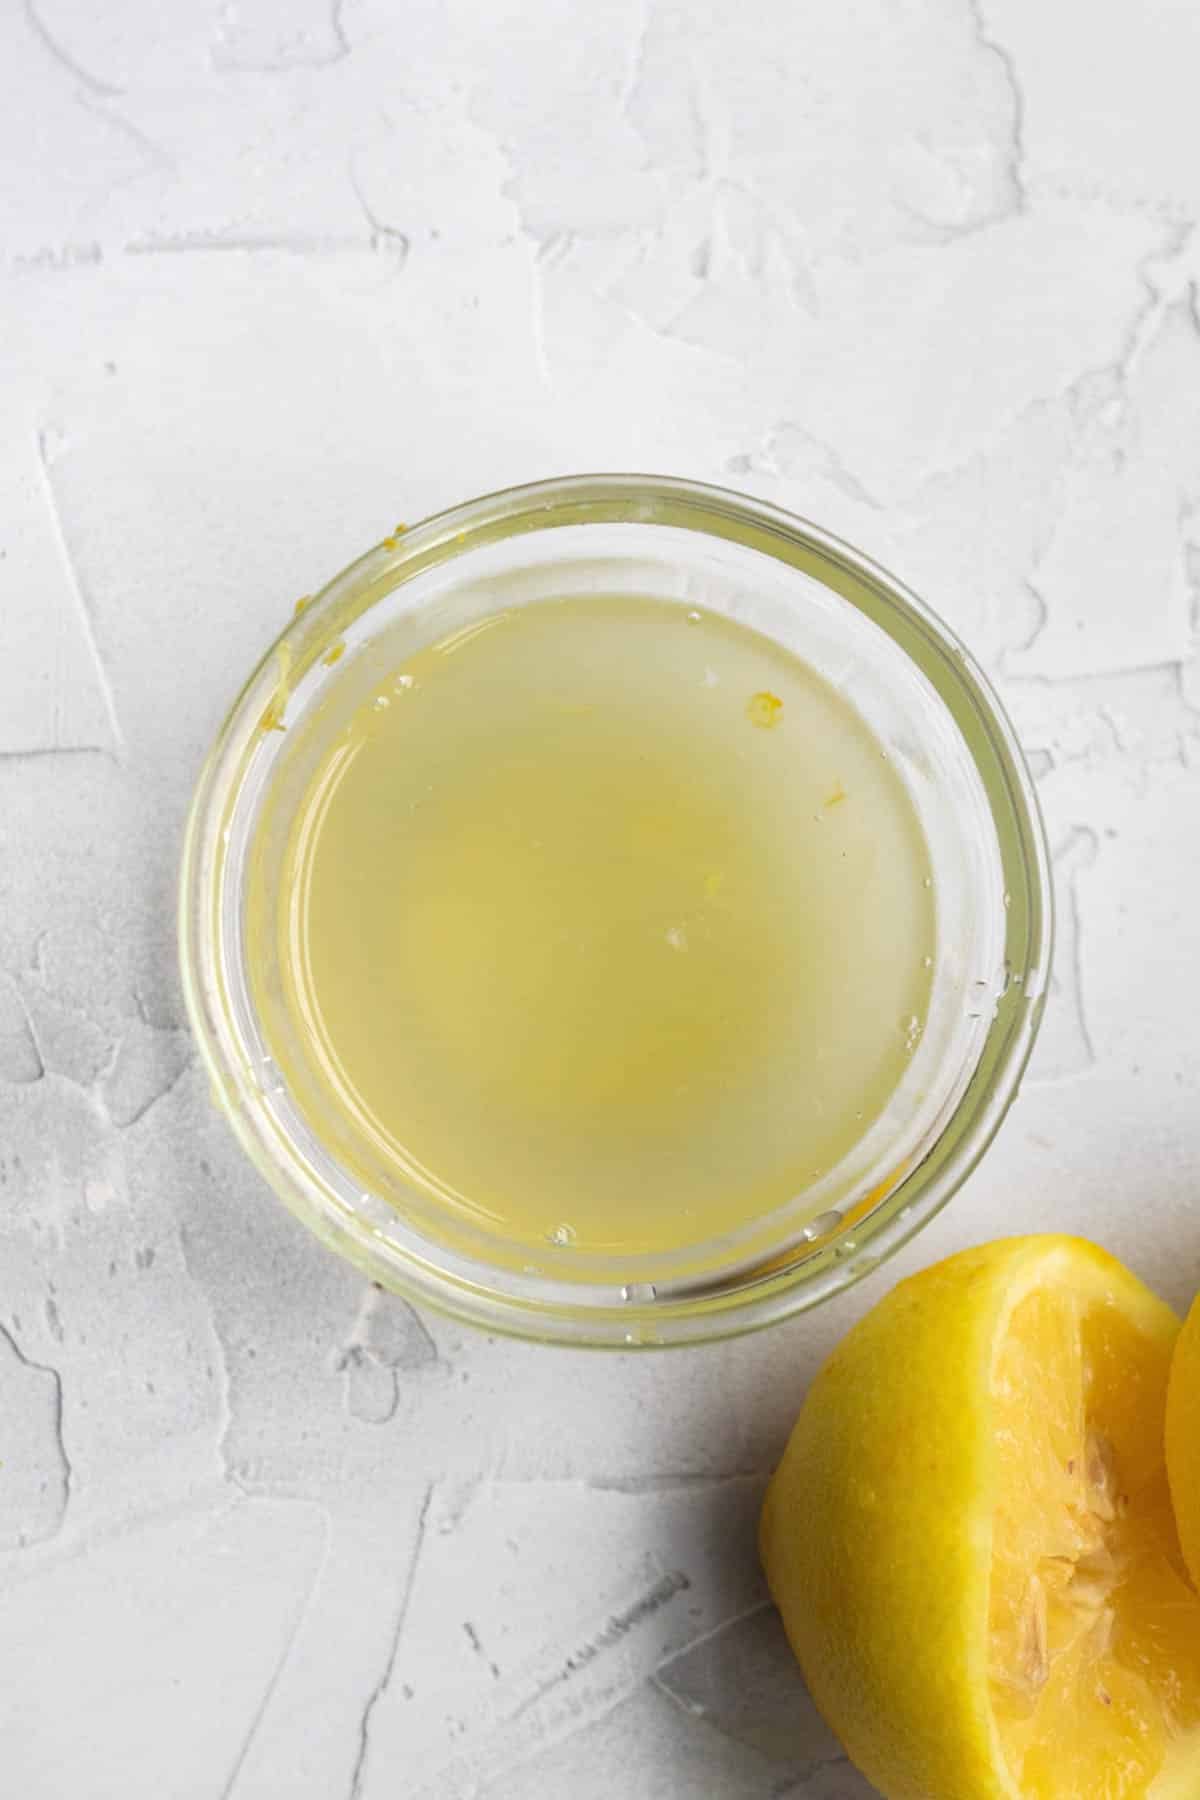 A small bowl of cloudy yellowy lemon juice.